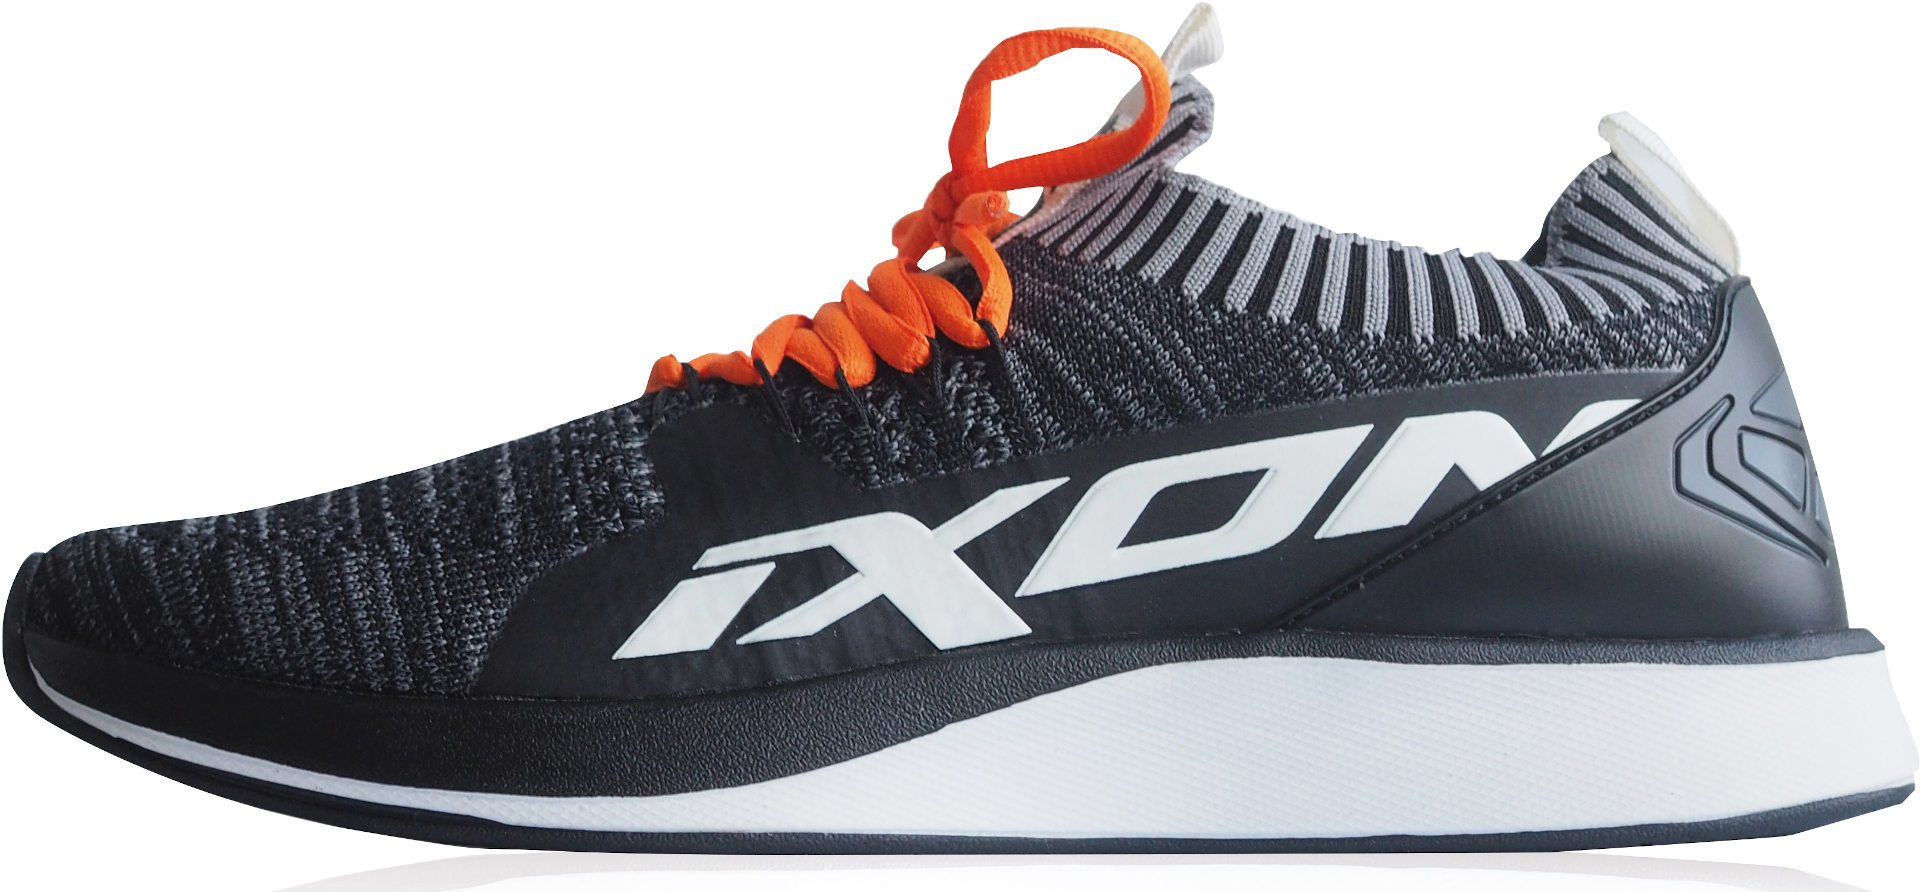 Ixon Paddock Schuhe, schwarz-weiss-orange, Größe 43, schwarz-weiss-orange, Größe 43